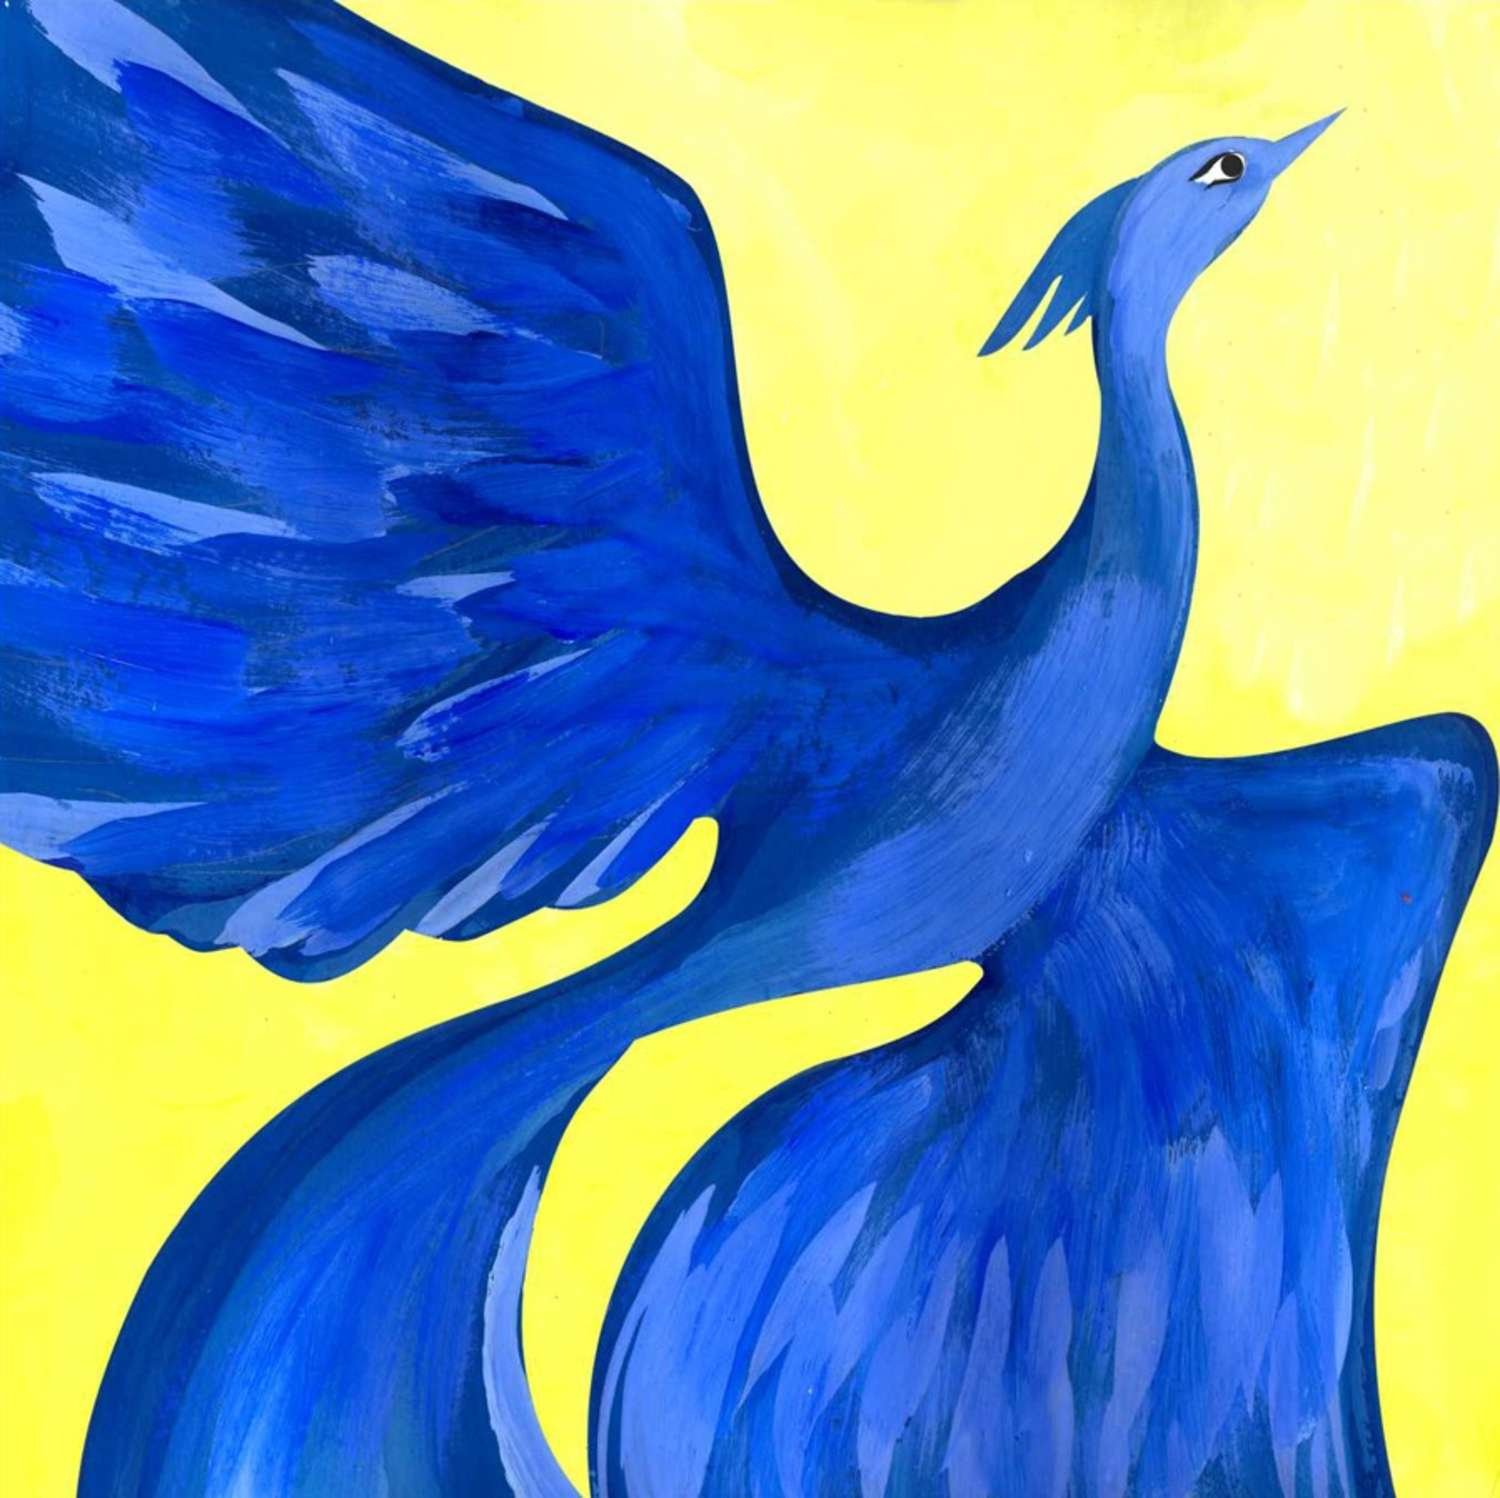 Метерлинк Морис, синяя птица, 1989